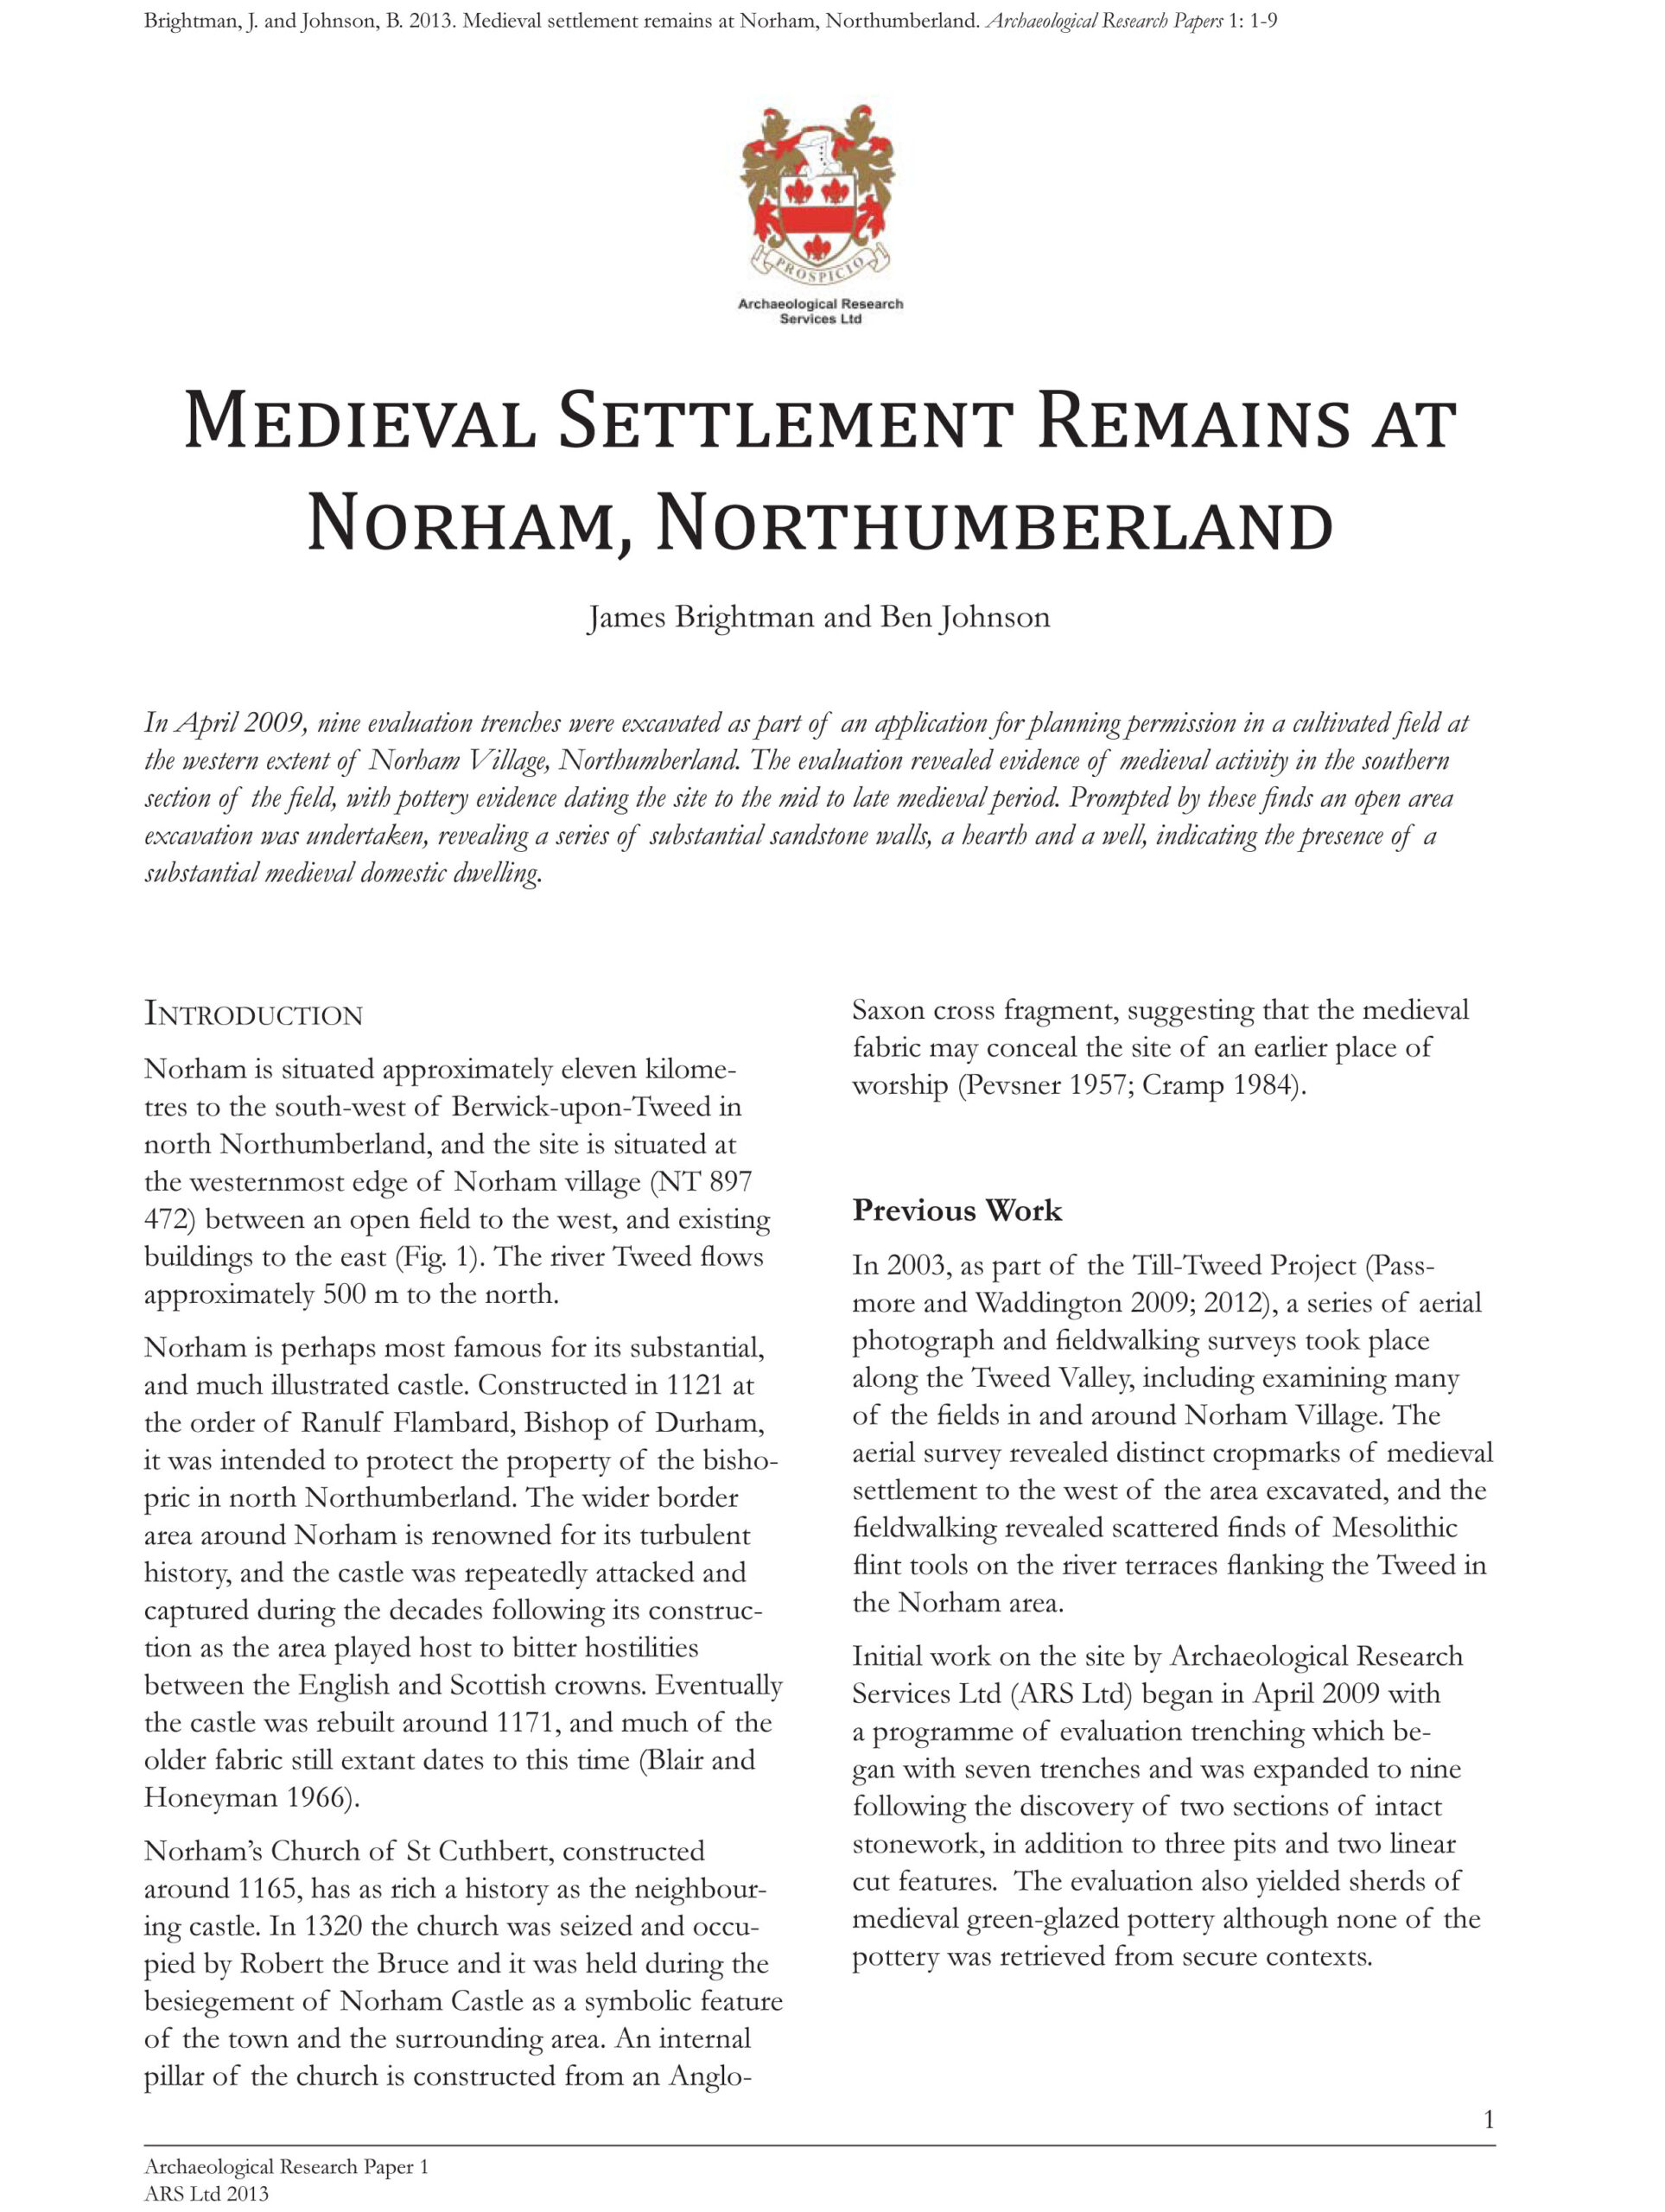 ARP 1 Medieval Settlement in Norham 1